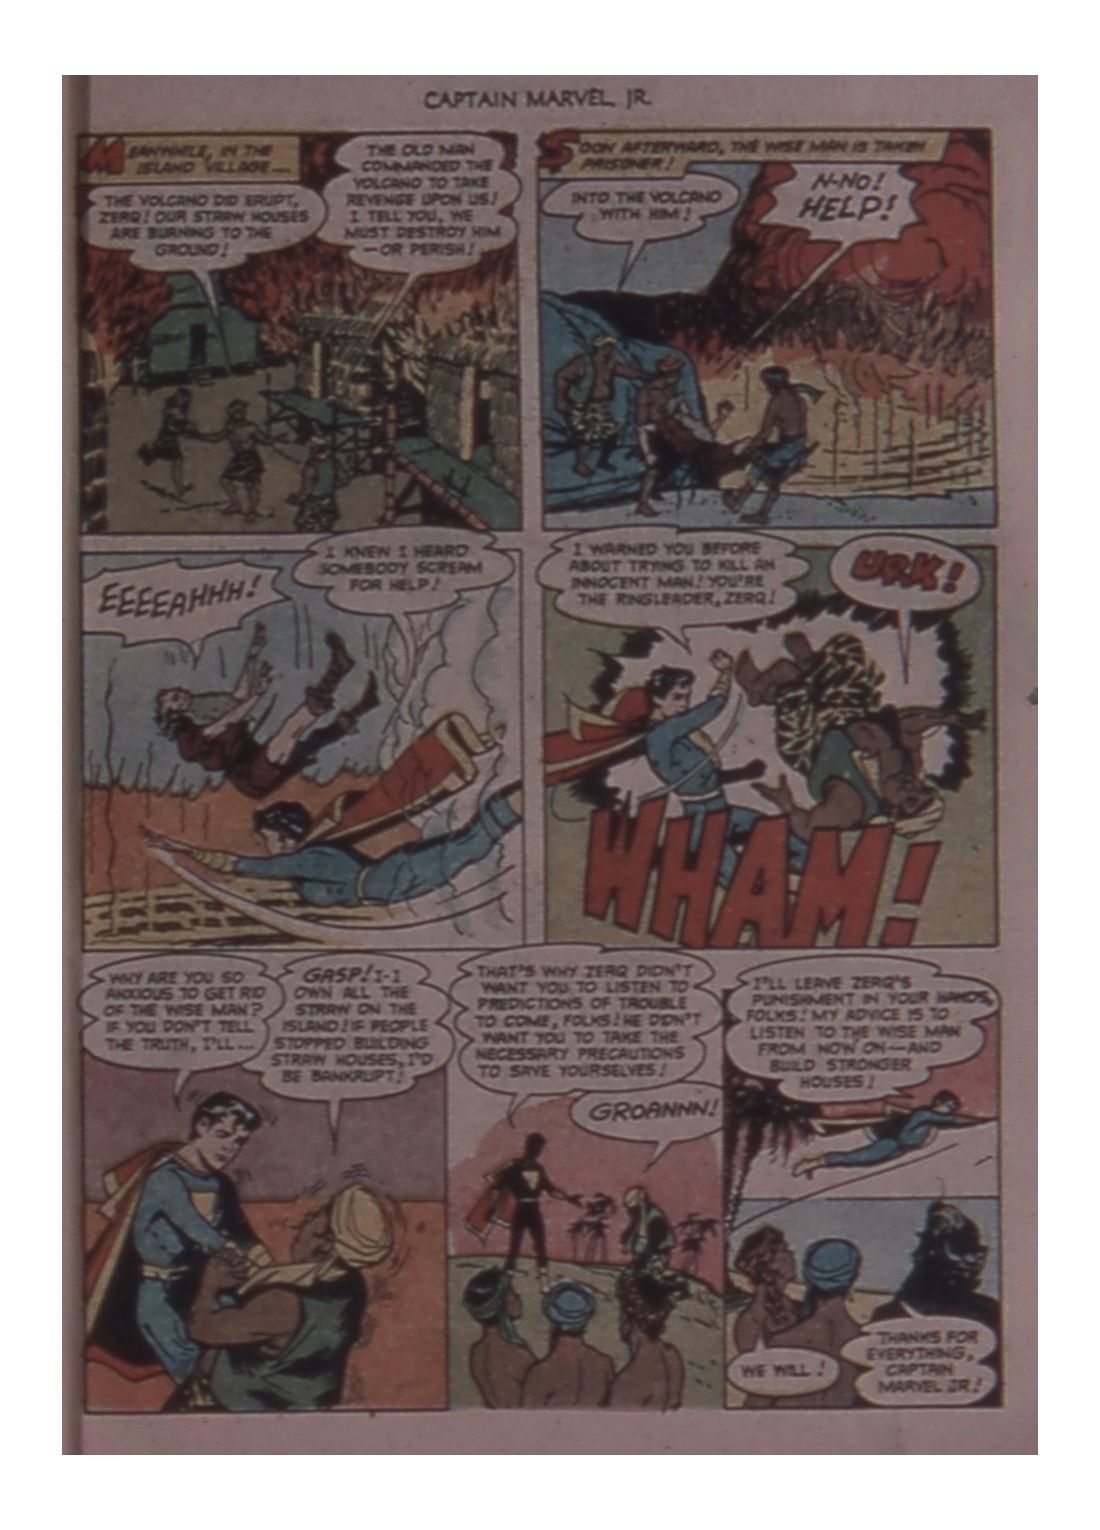 Read online Captain Marvel, Jr. comic -  Issue #114 - 23